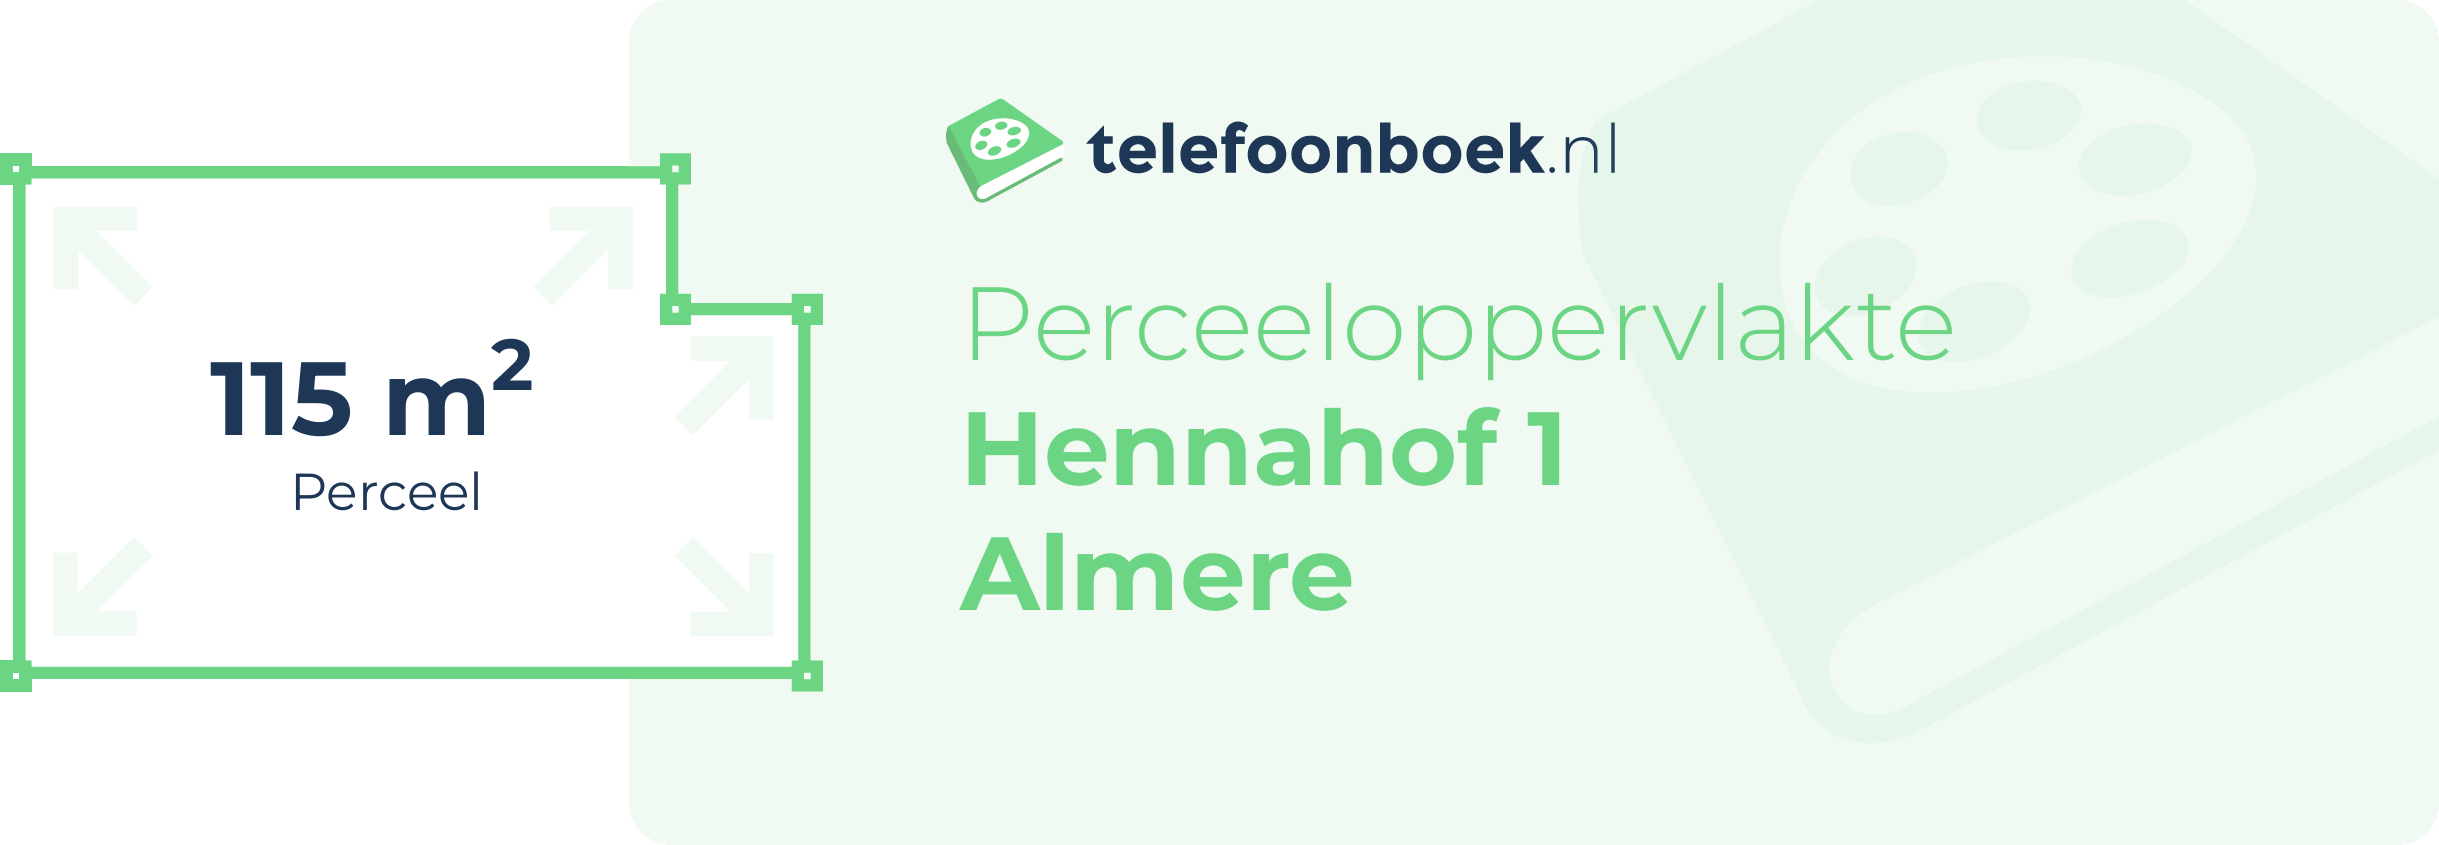 Perceeloppervlakte Hennahof 1 Almere